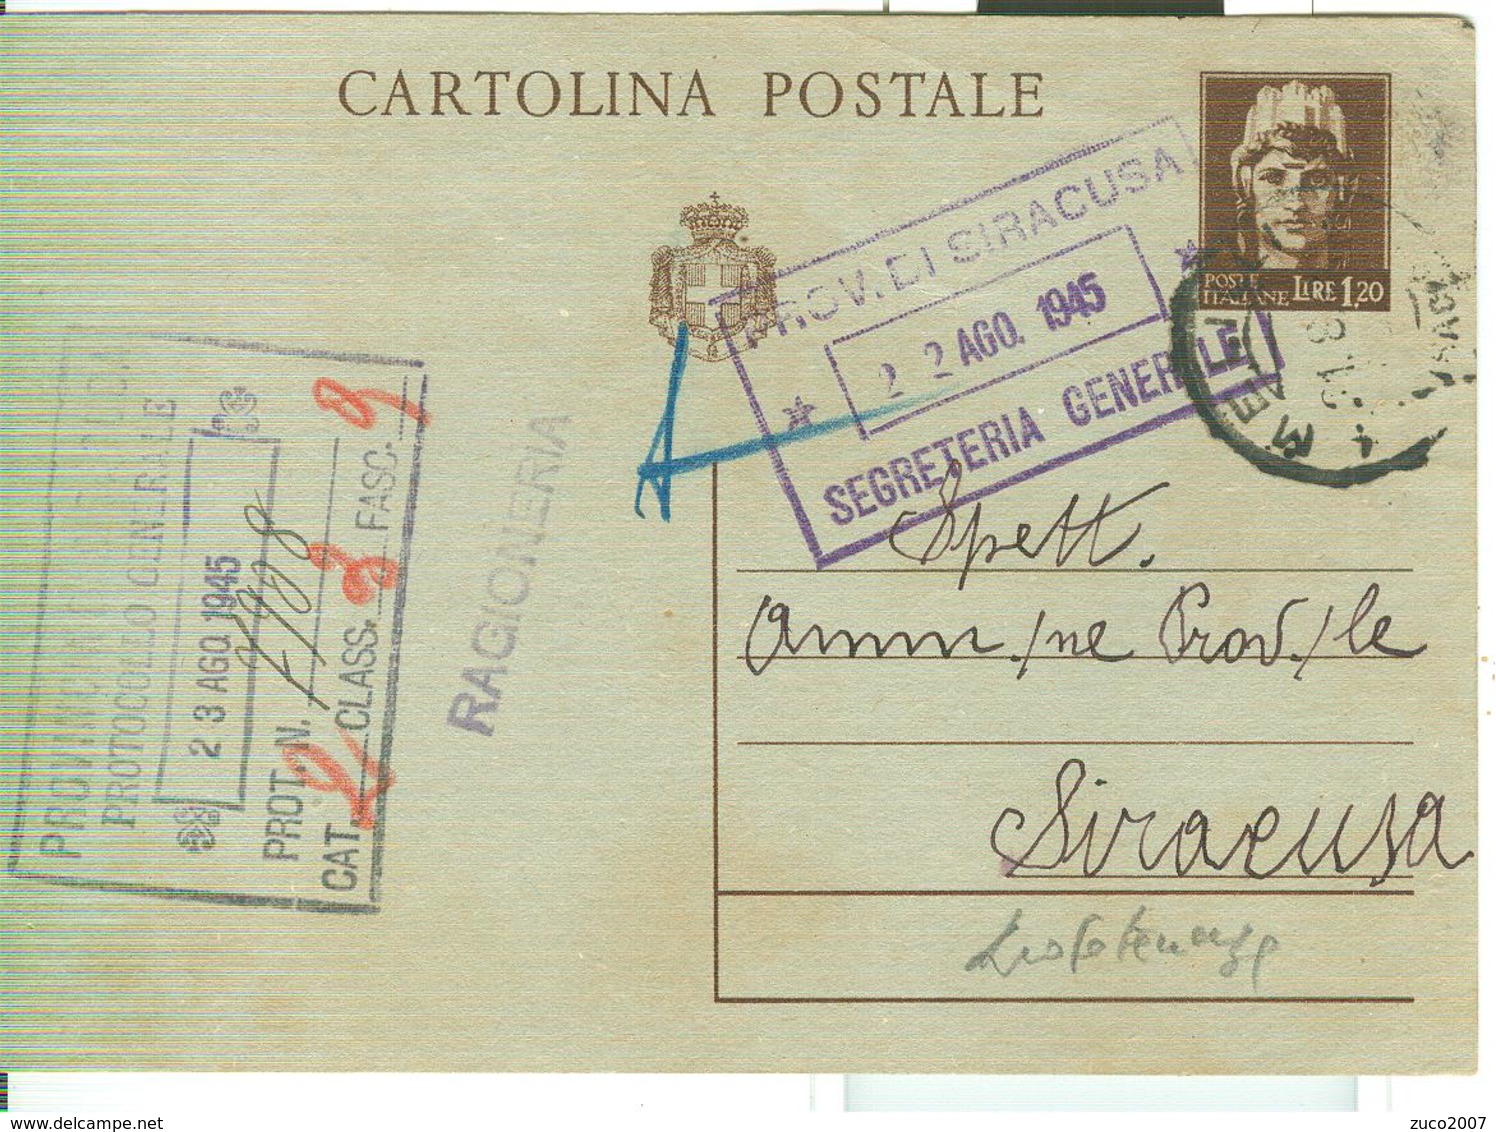 CARTOLINA POST. TURRITA CON STEMMA £ 1,20,TIMBRO POSTE MELILLI (SIRACUSA),1945,PER SIRACUSA, - Storia Postale